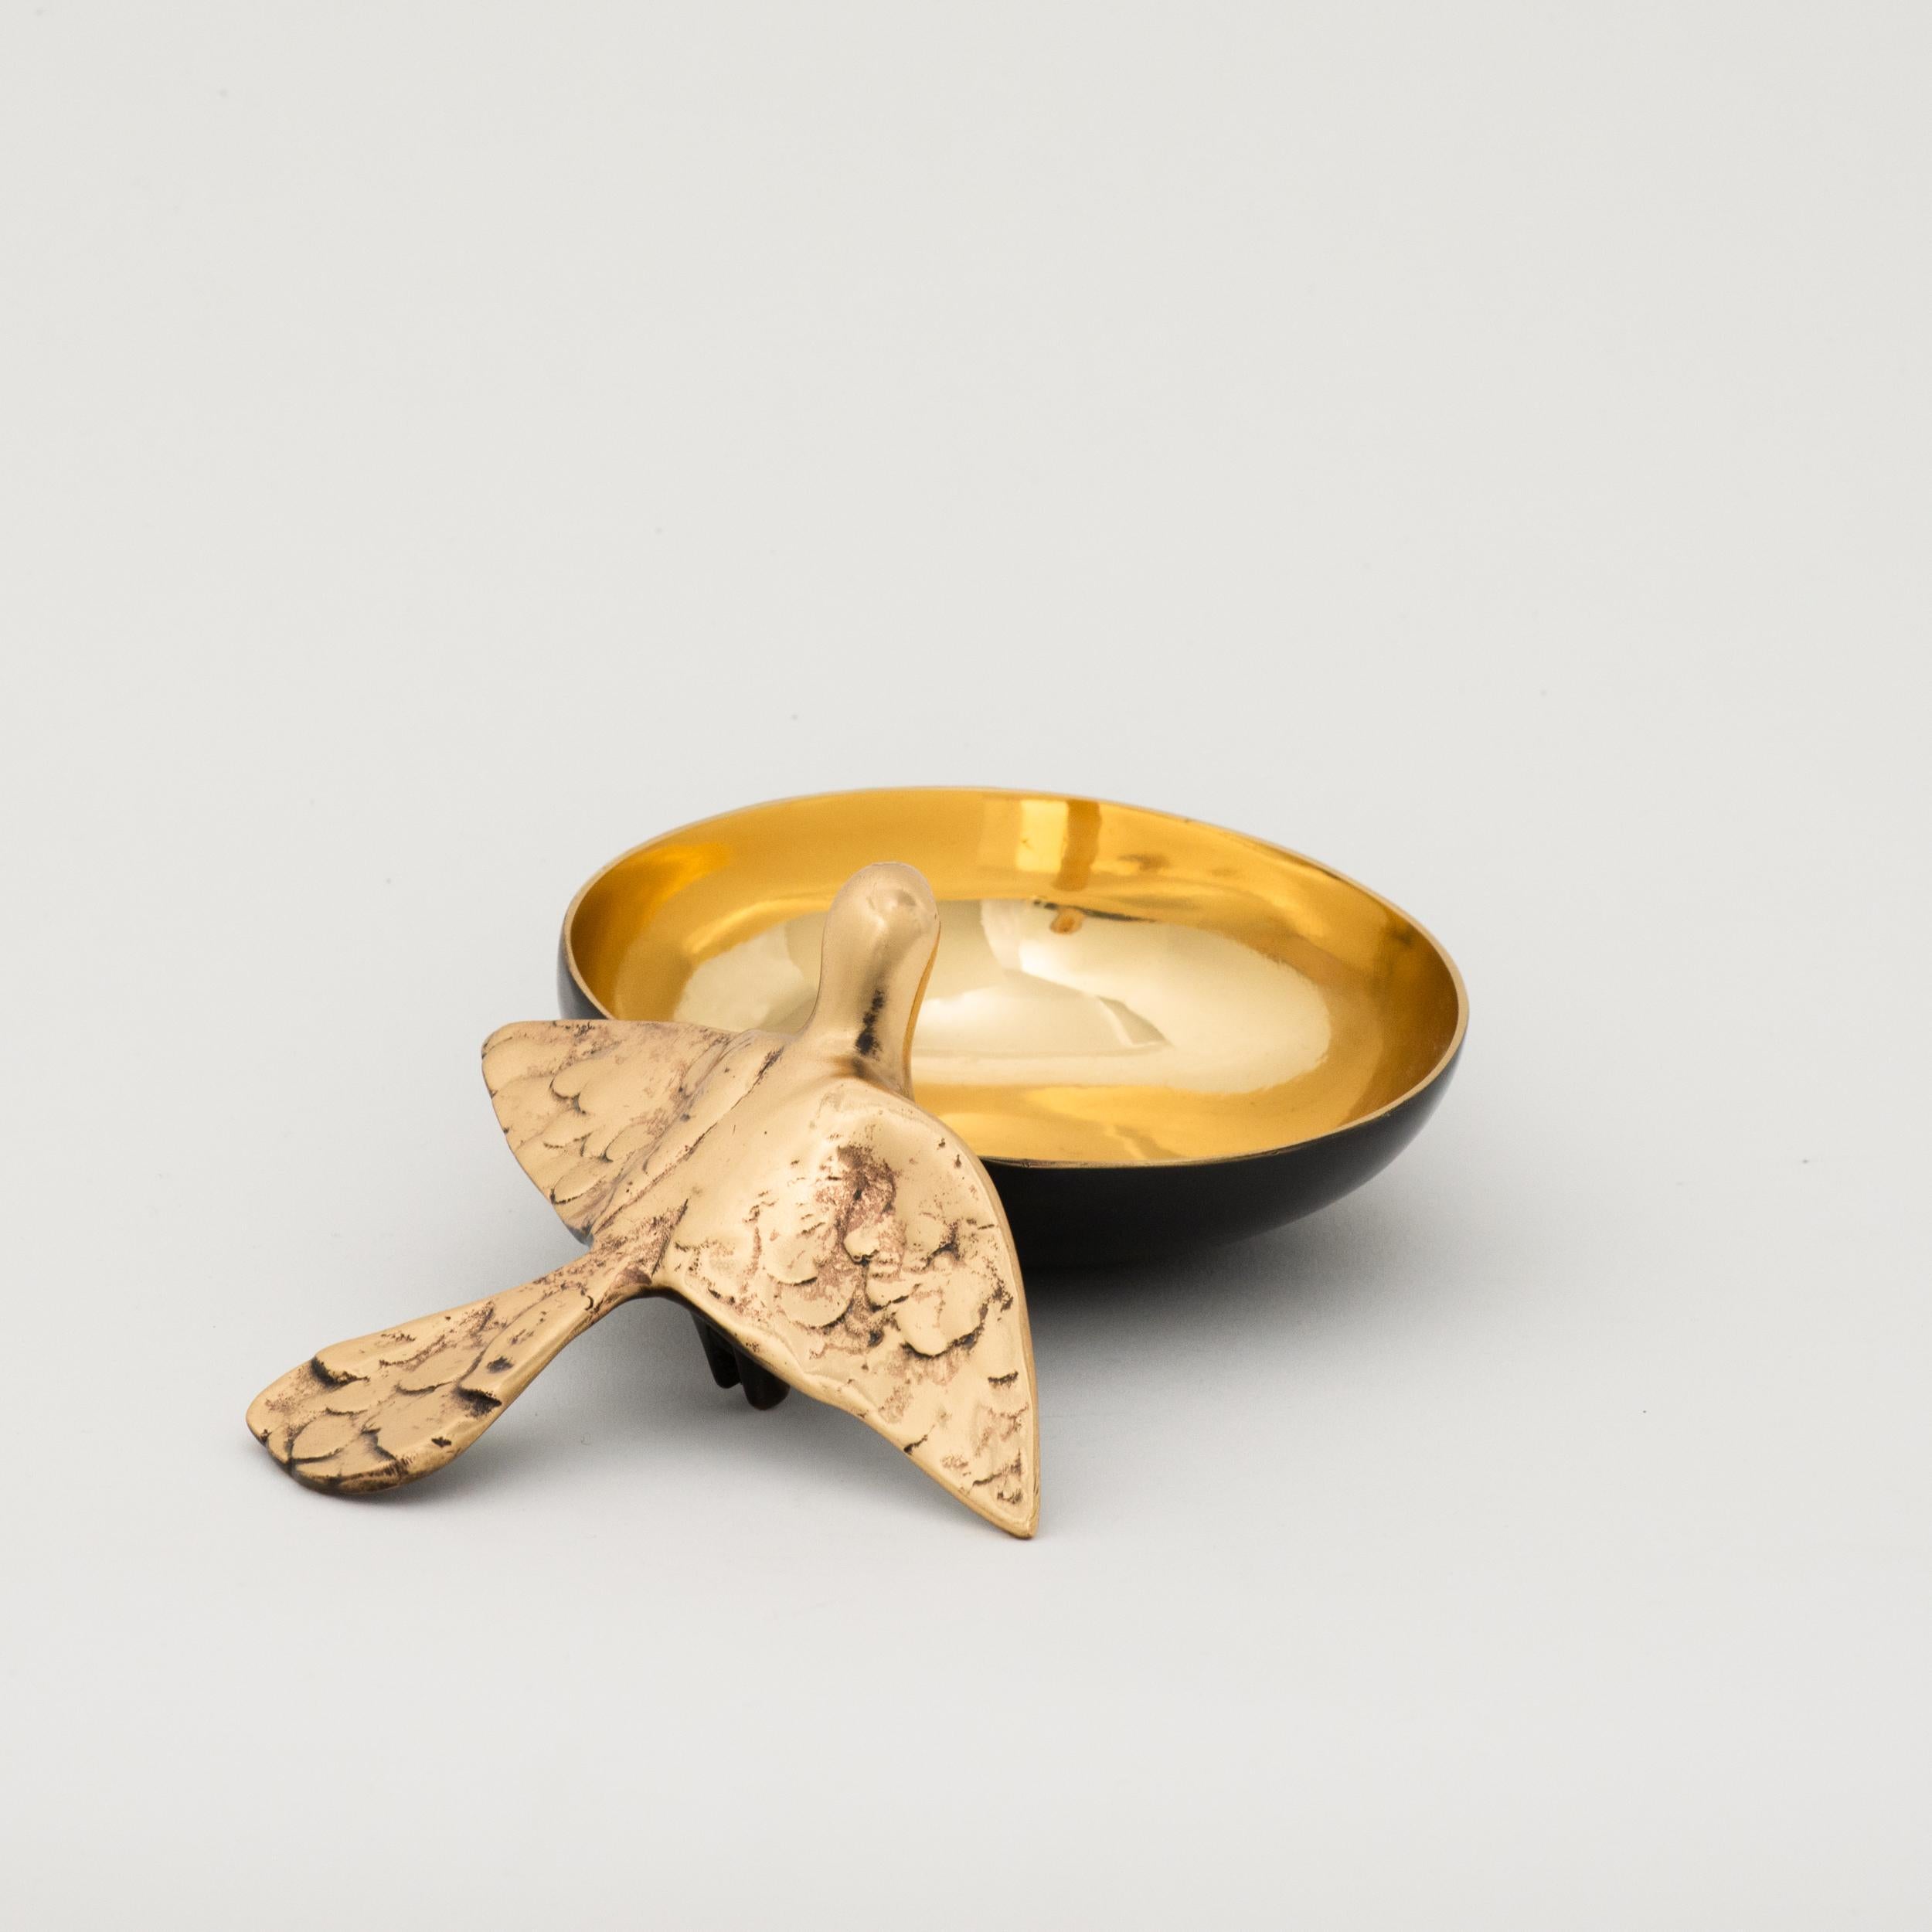 Indian Handmade Cast Bronze Decorative Bowl with Bird